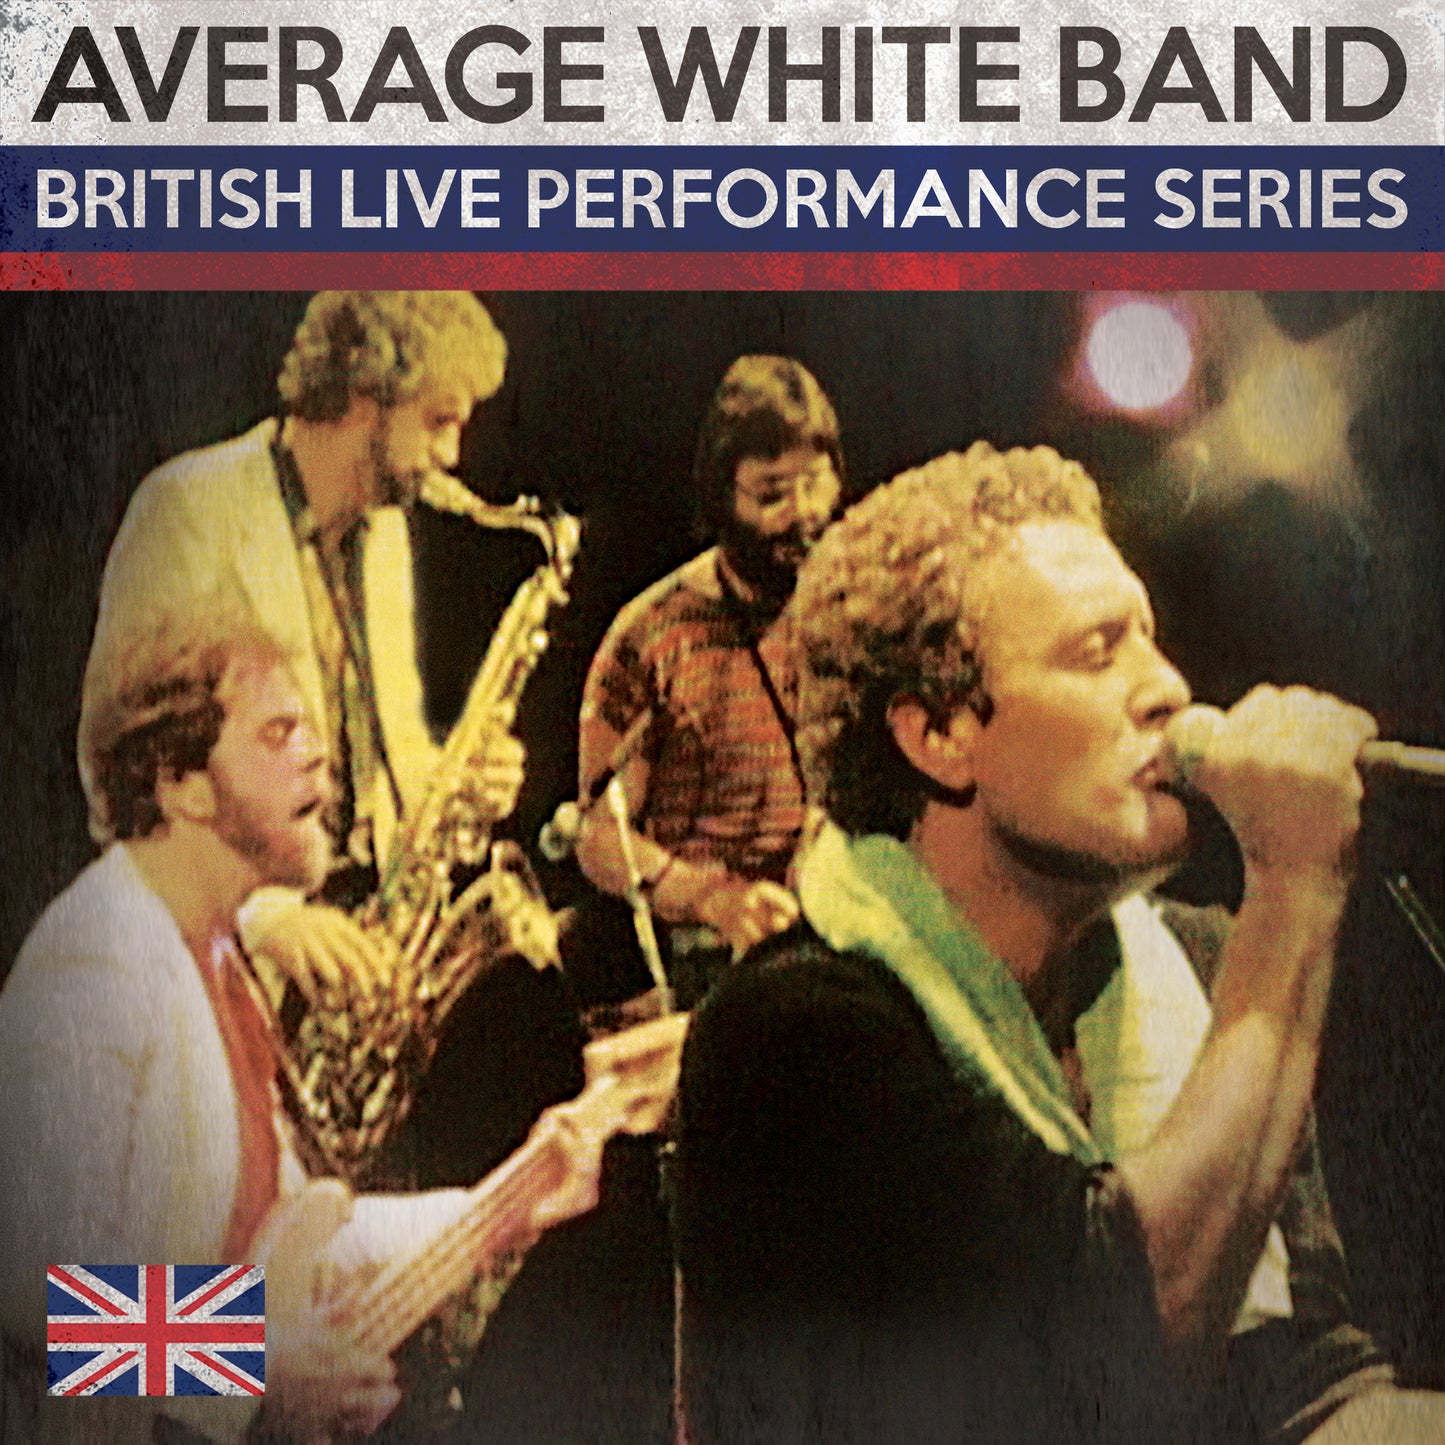 Average White Band (British Live Performance Series)